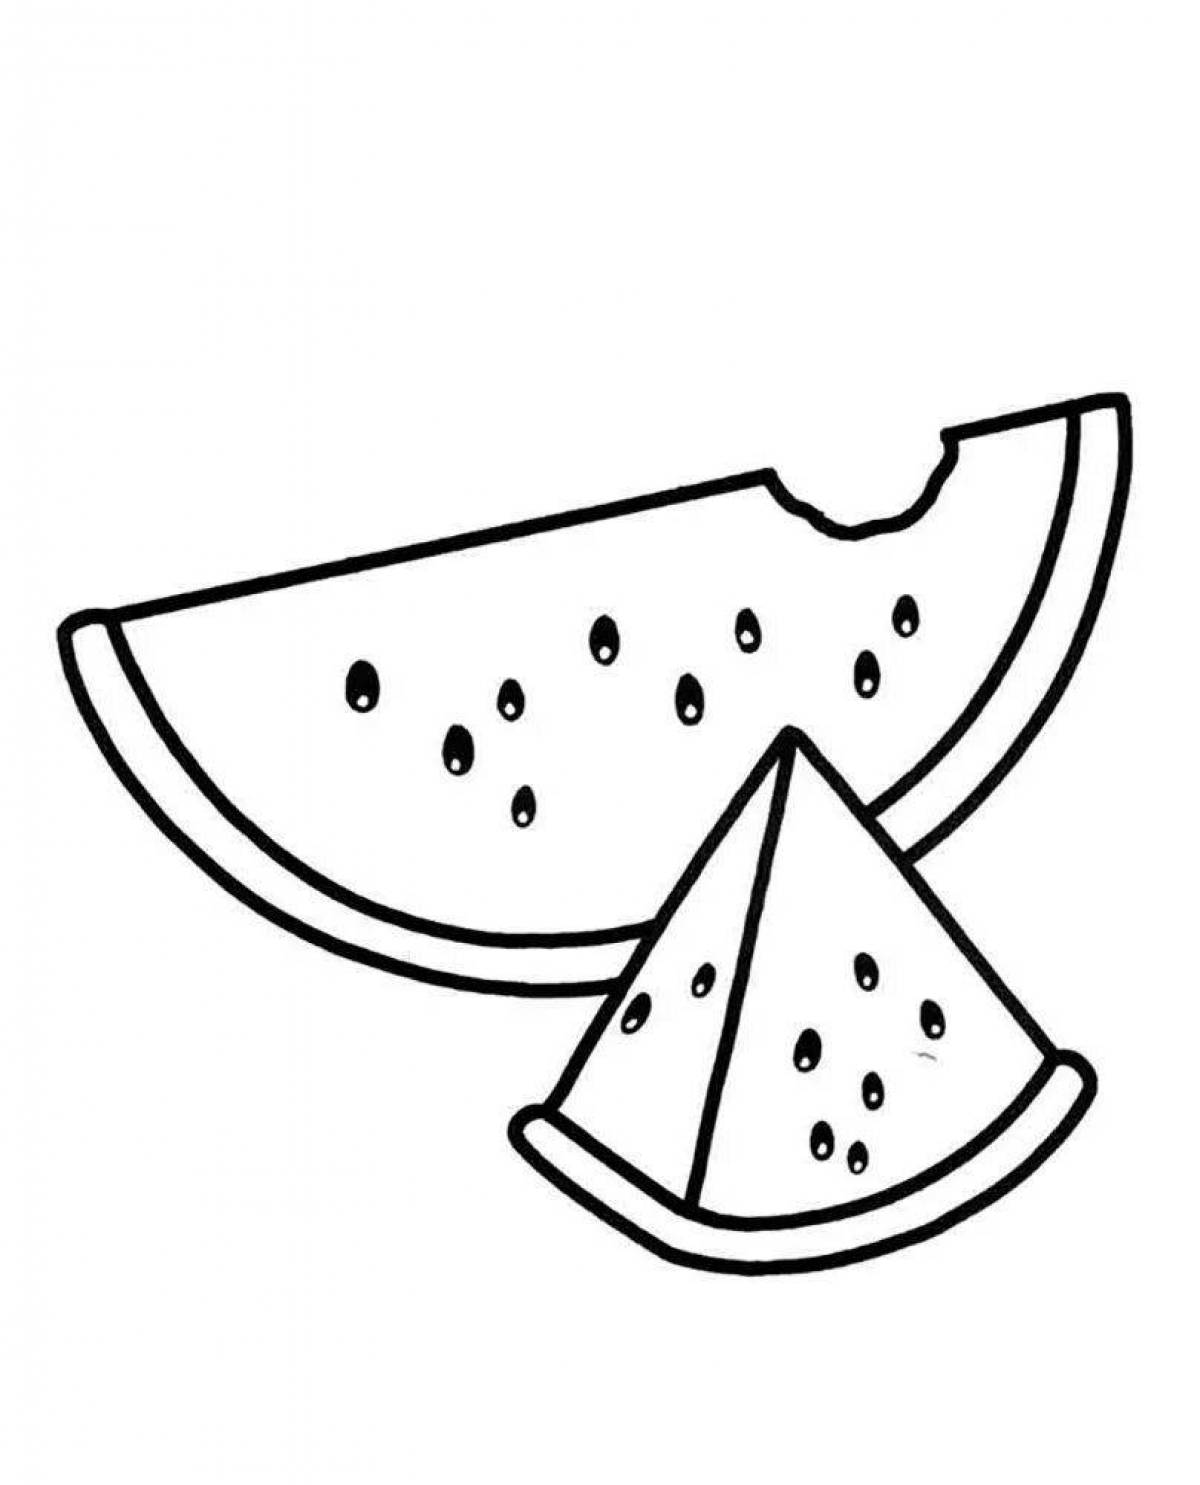 Joyful watermelon drawing